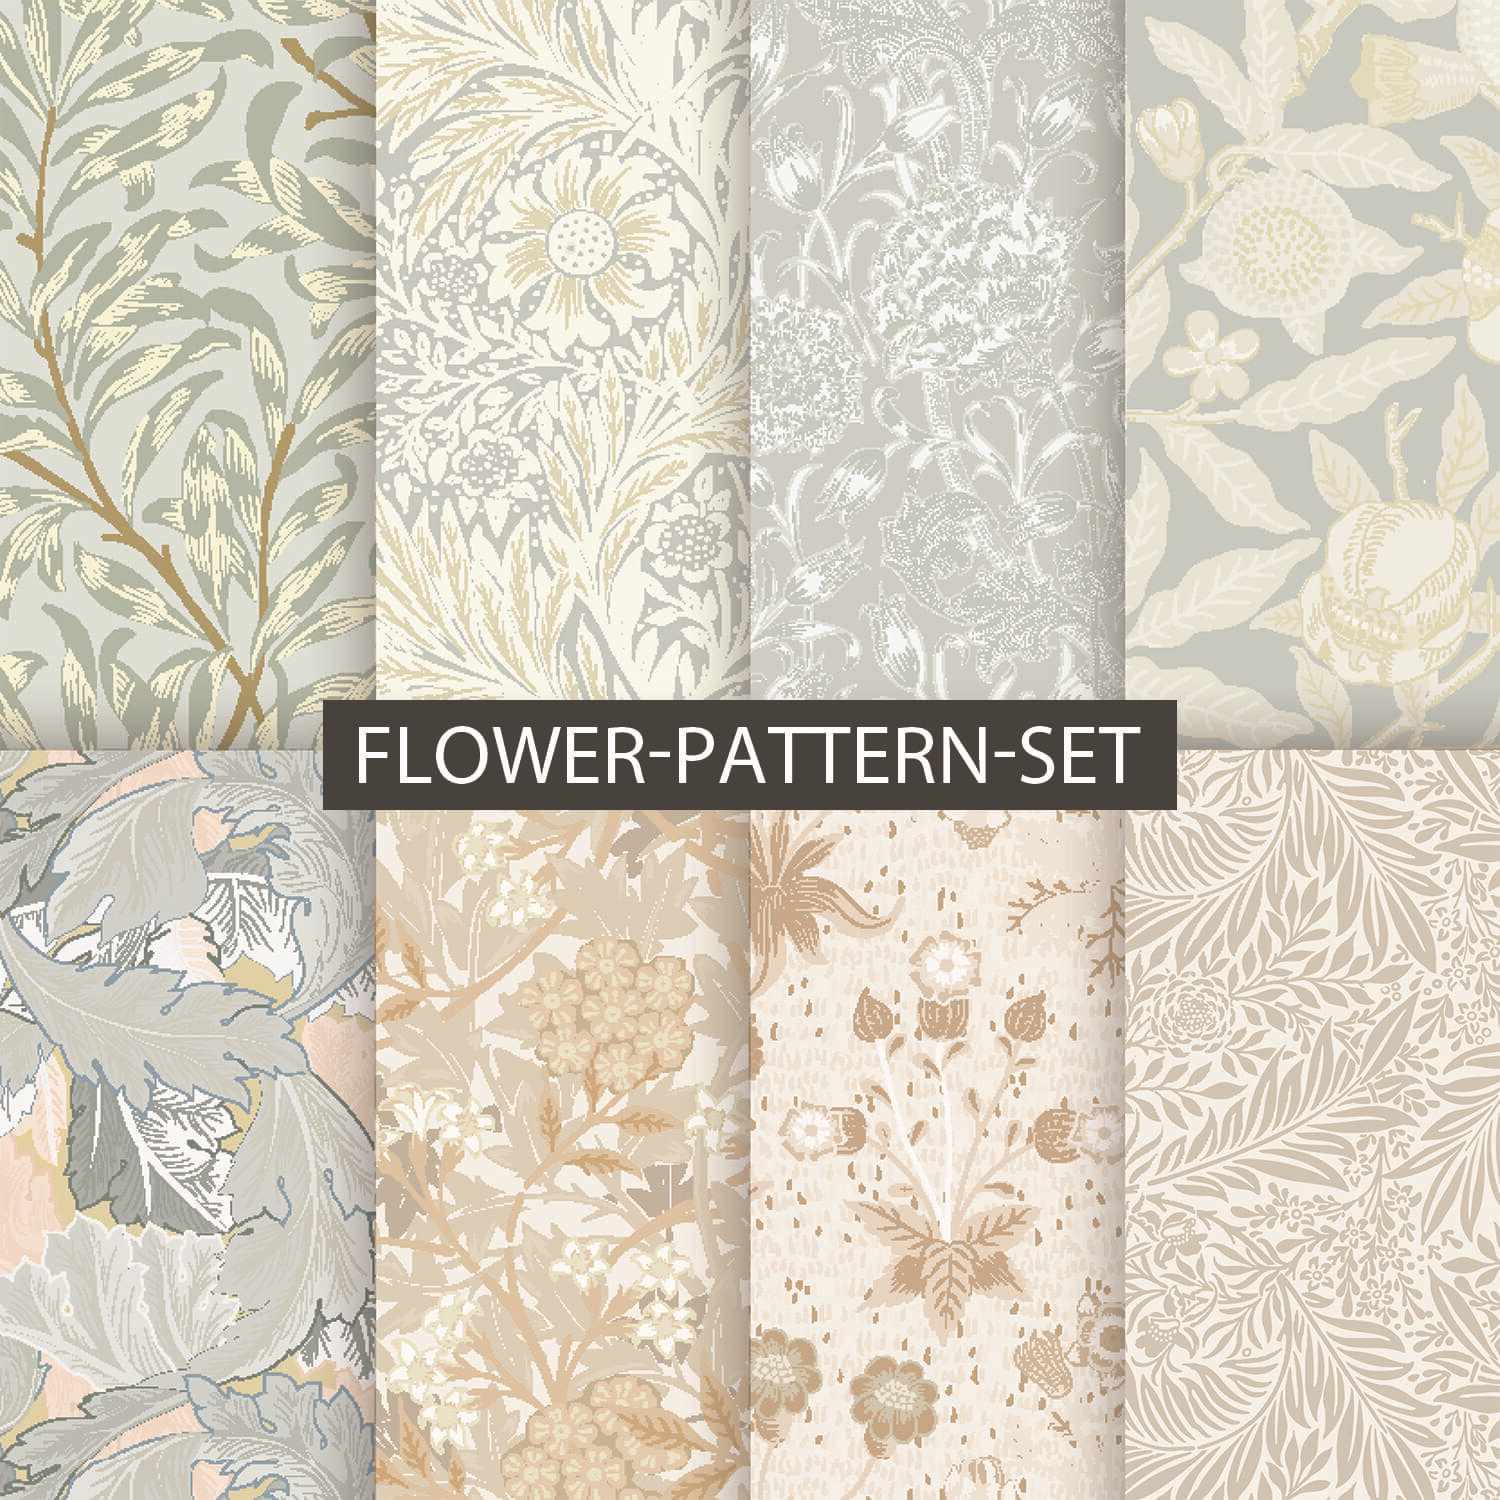 flower-pattern-set cover image.